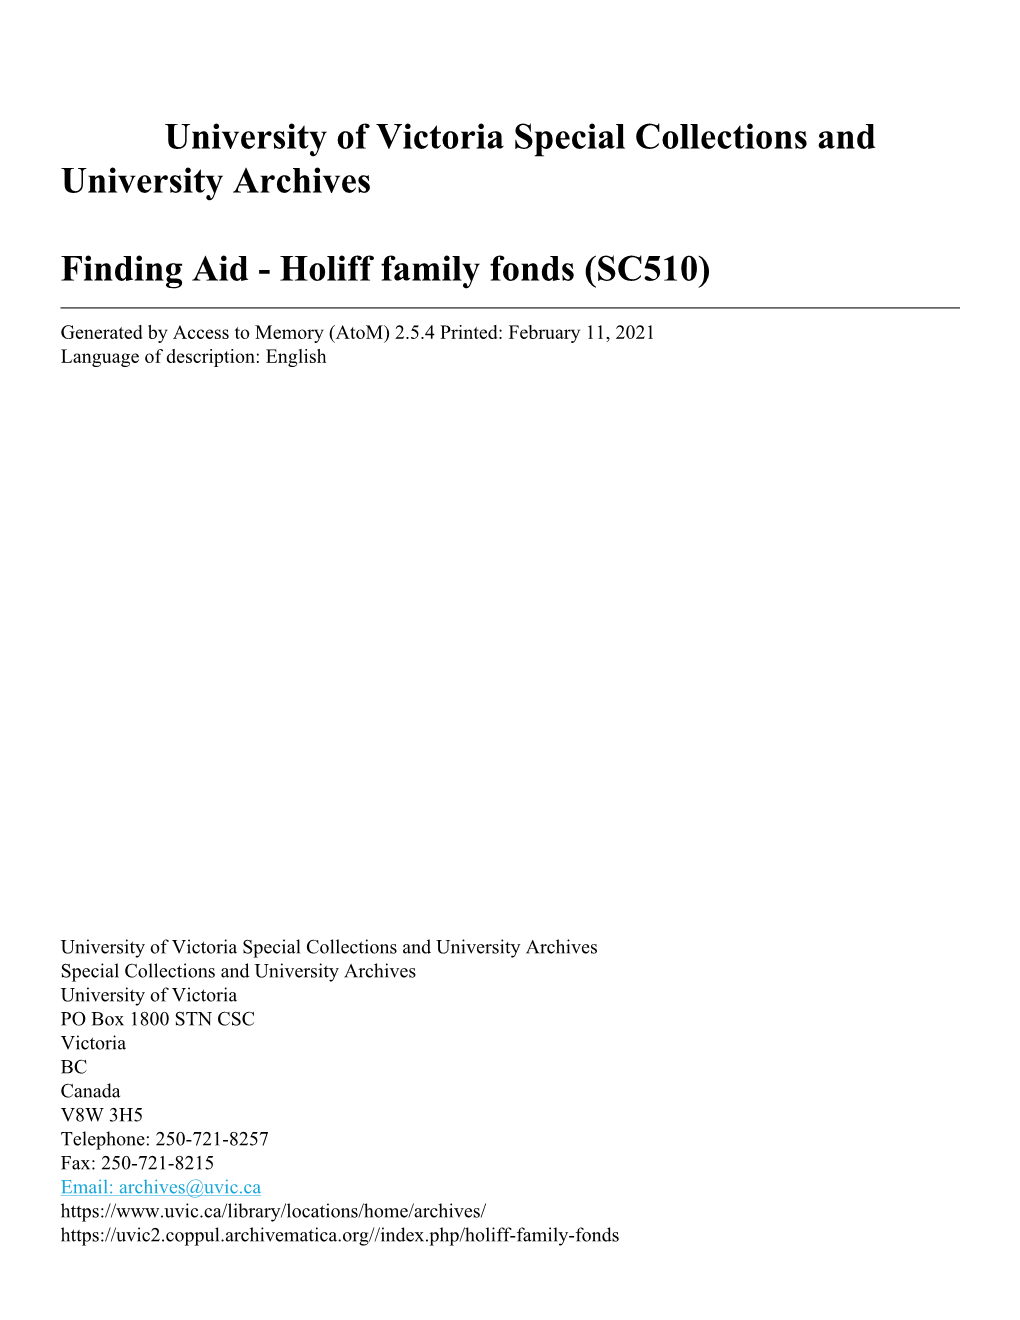 Holiff Family Fonds (SC510)